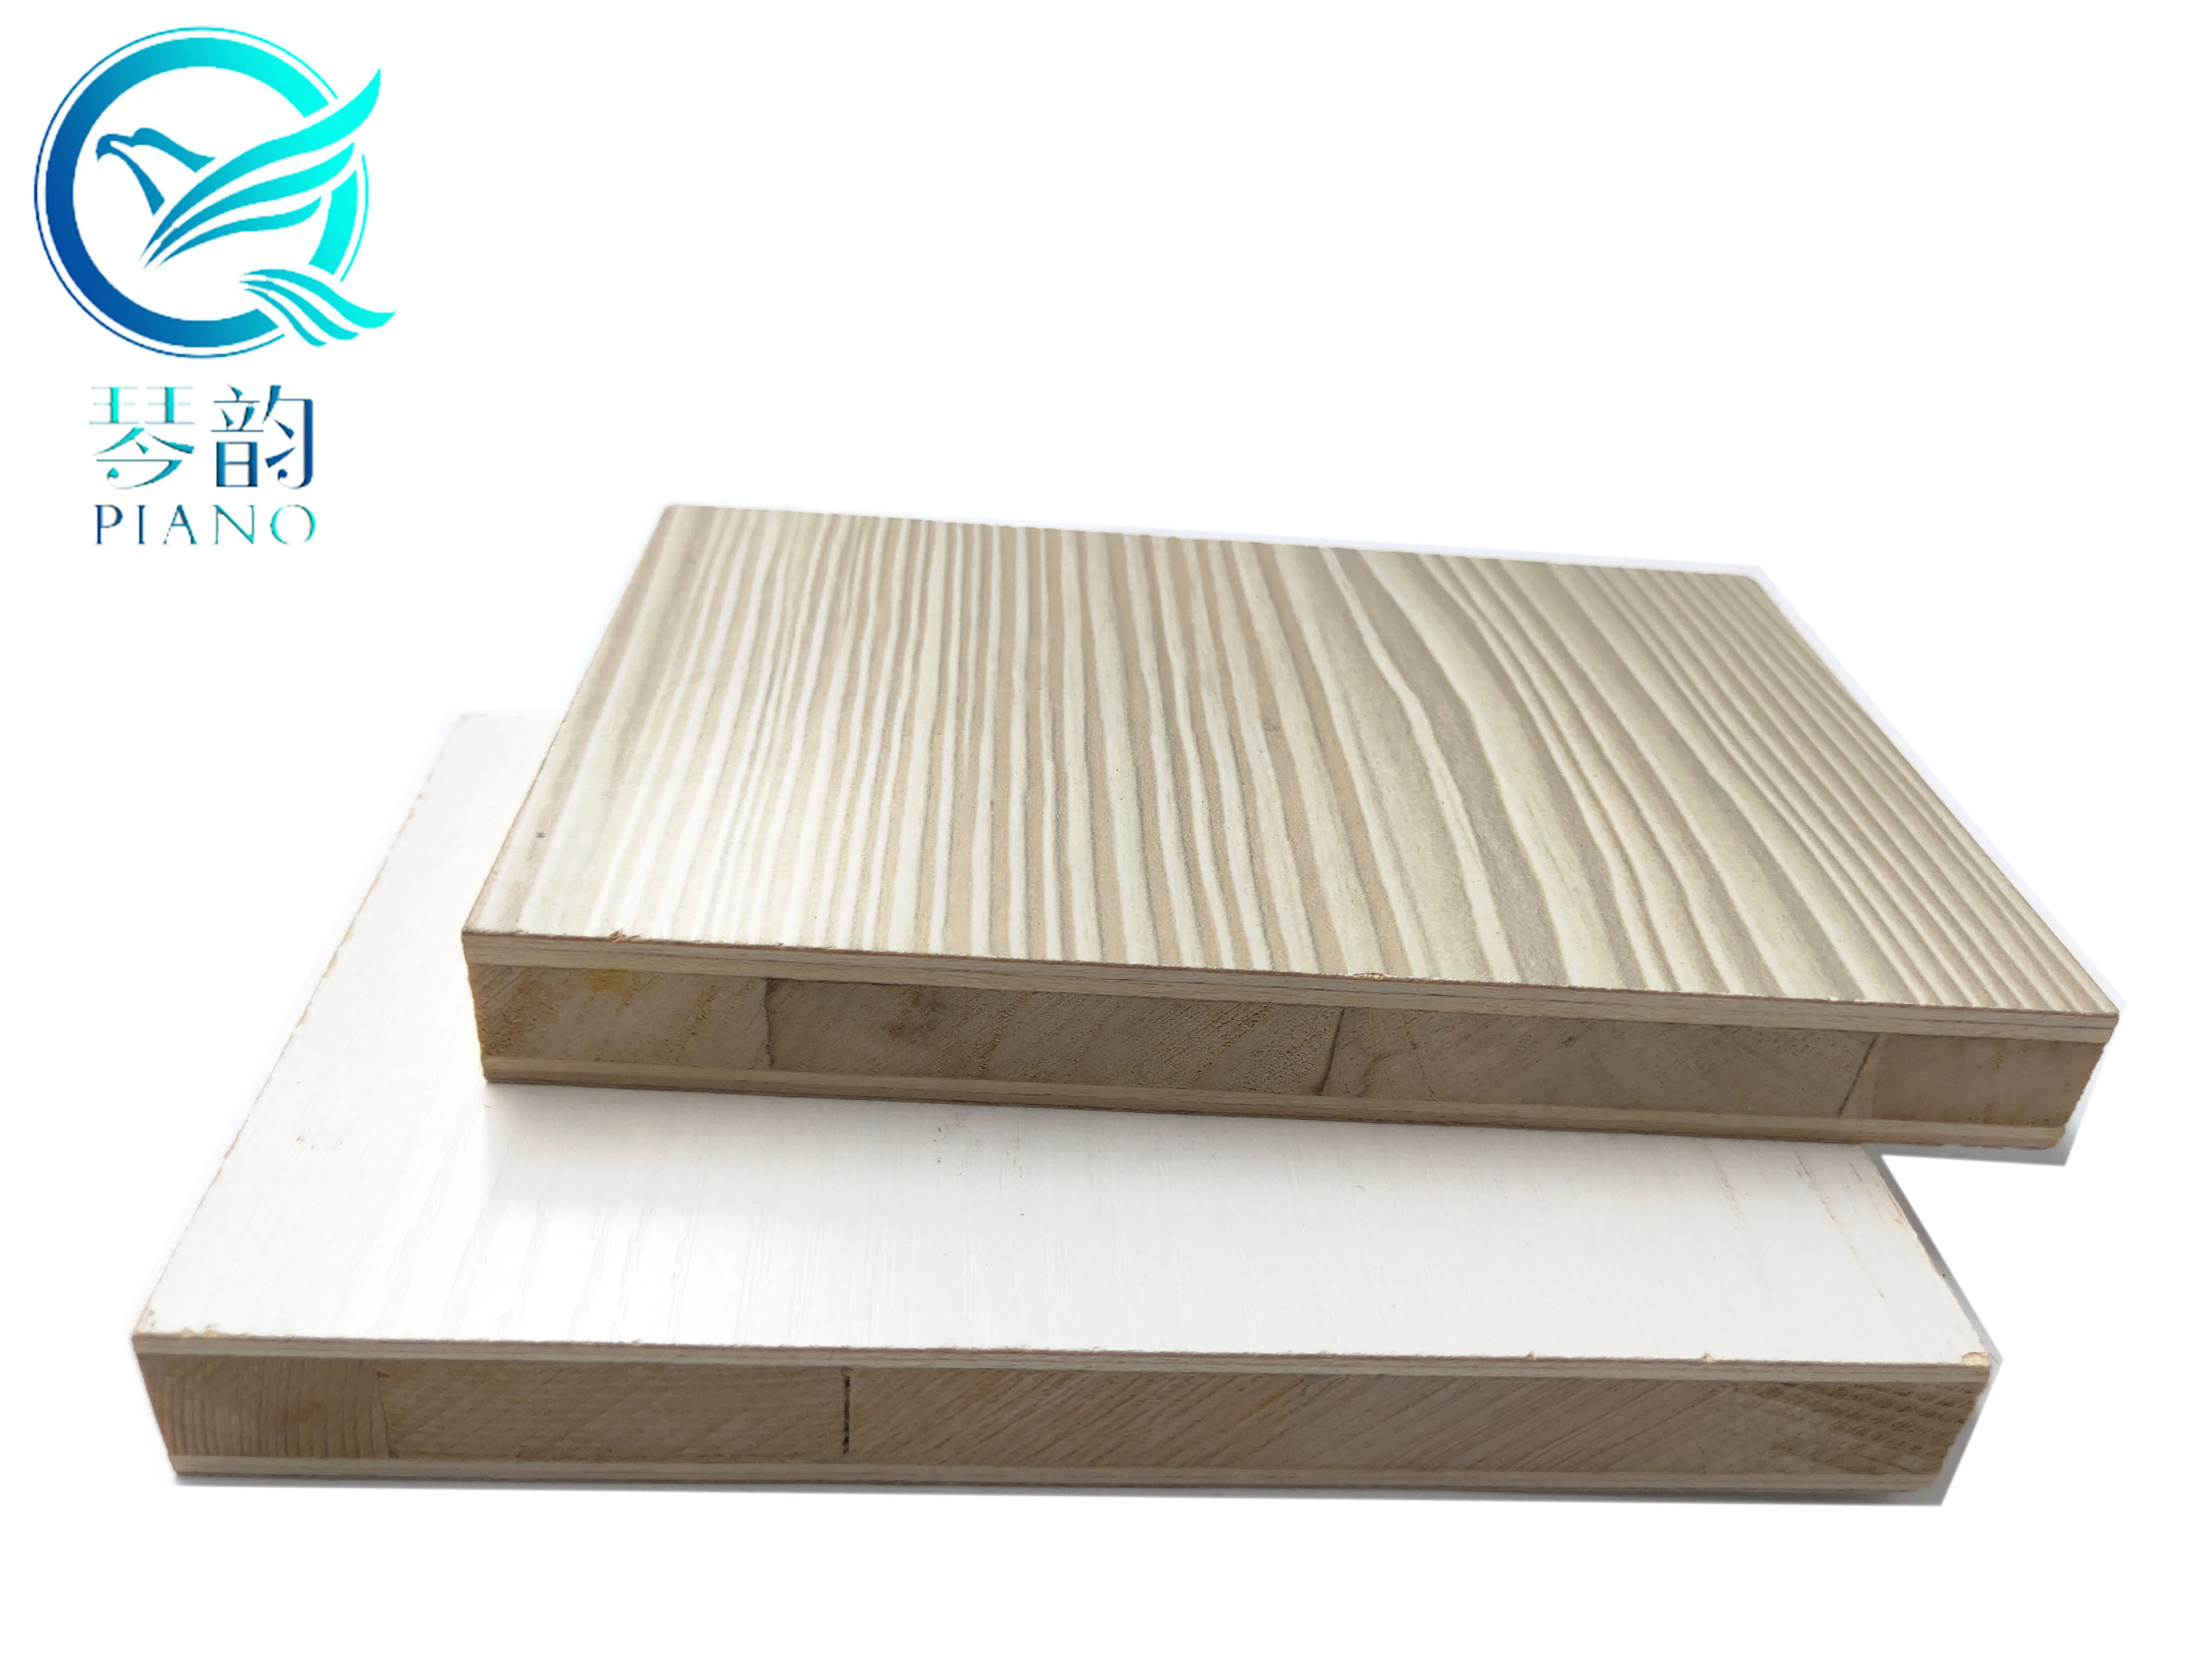 Qinge high quality block board 18mm for furniture good price block board